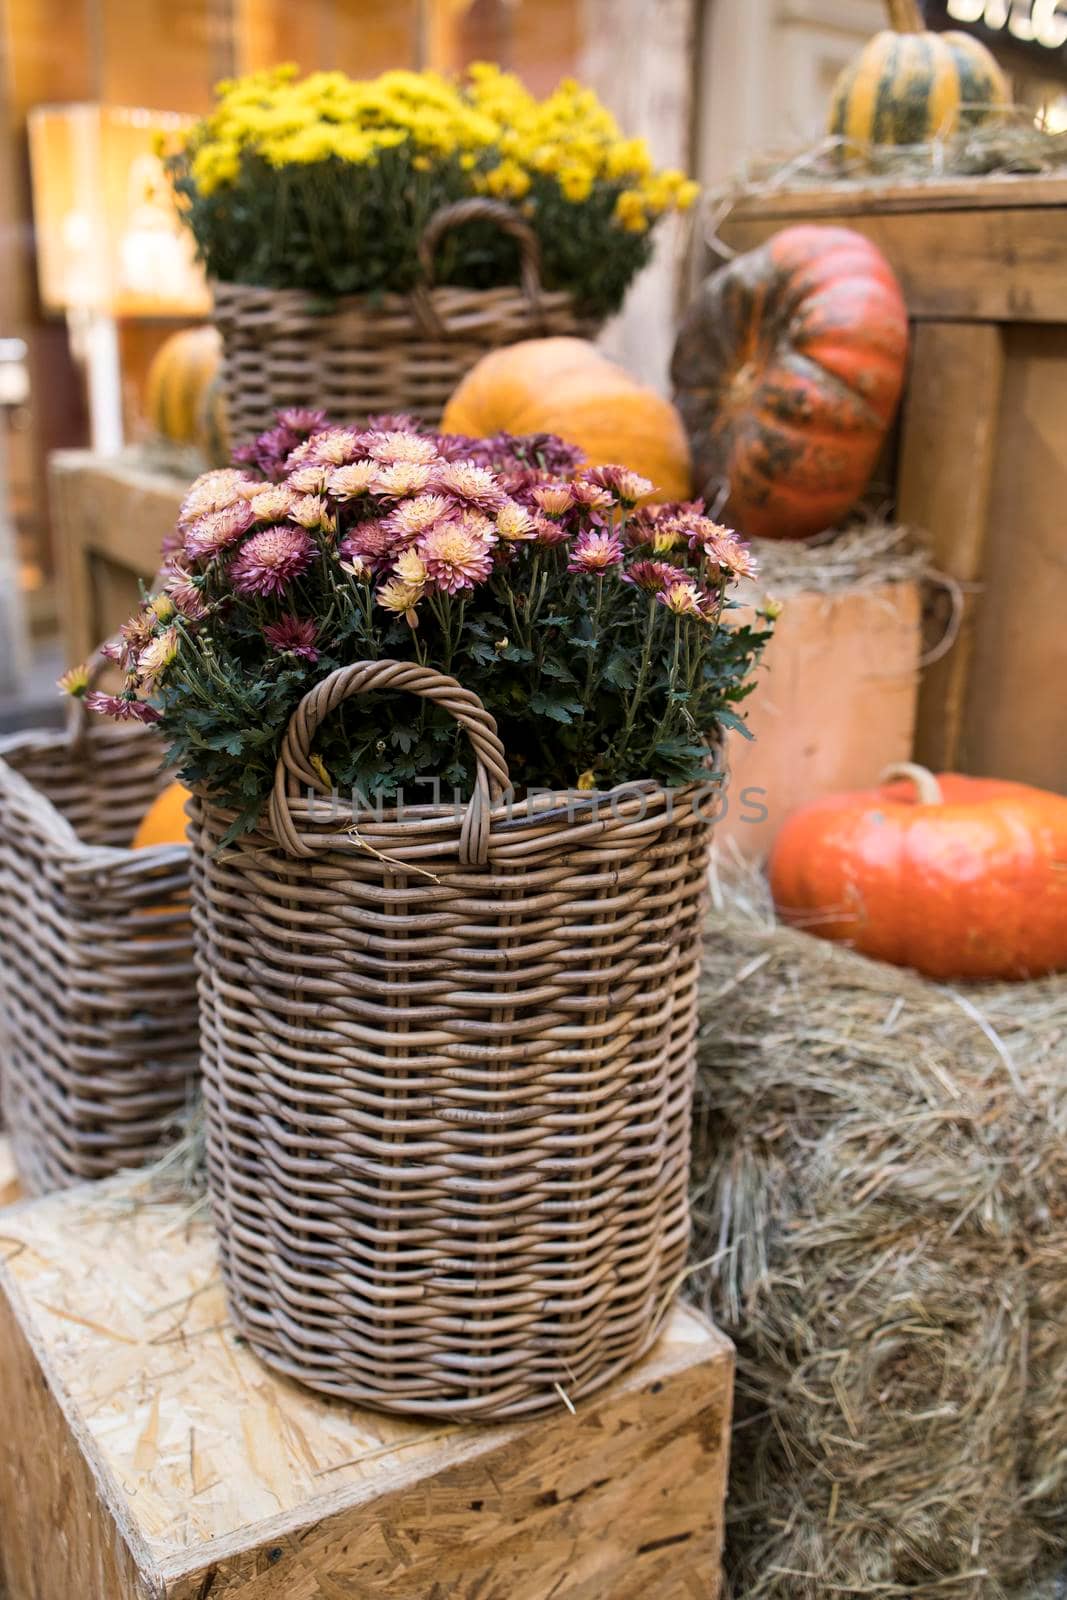 Colorful chrysanthemums in a wicker basket, pumpkins - Halloween decorations. by elenarostunova